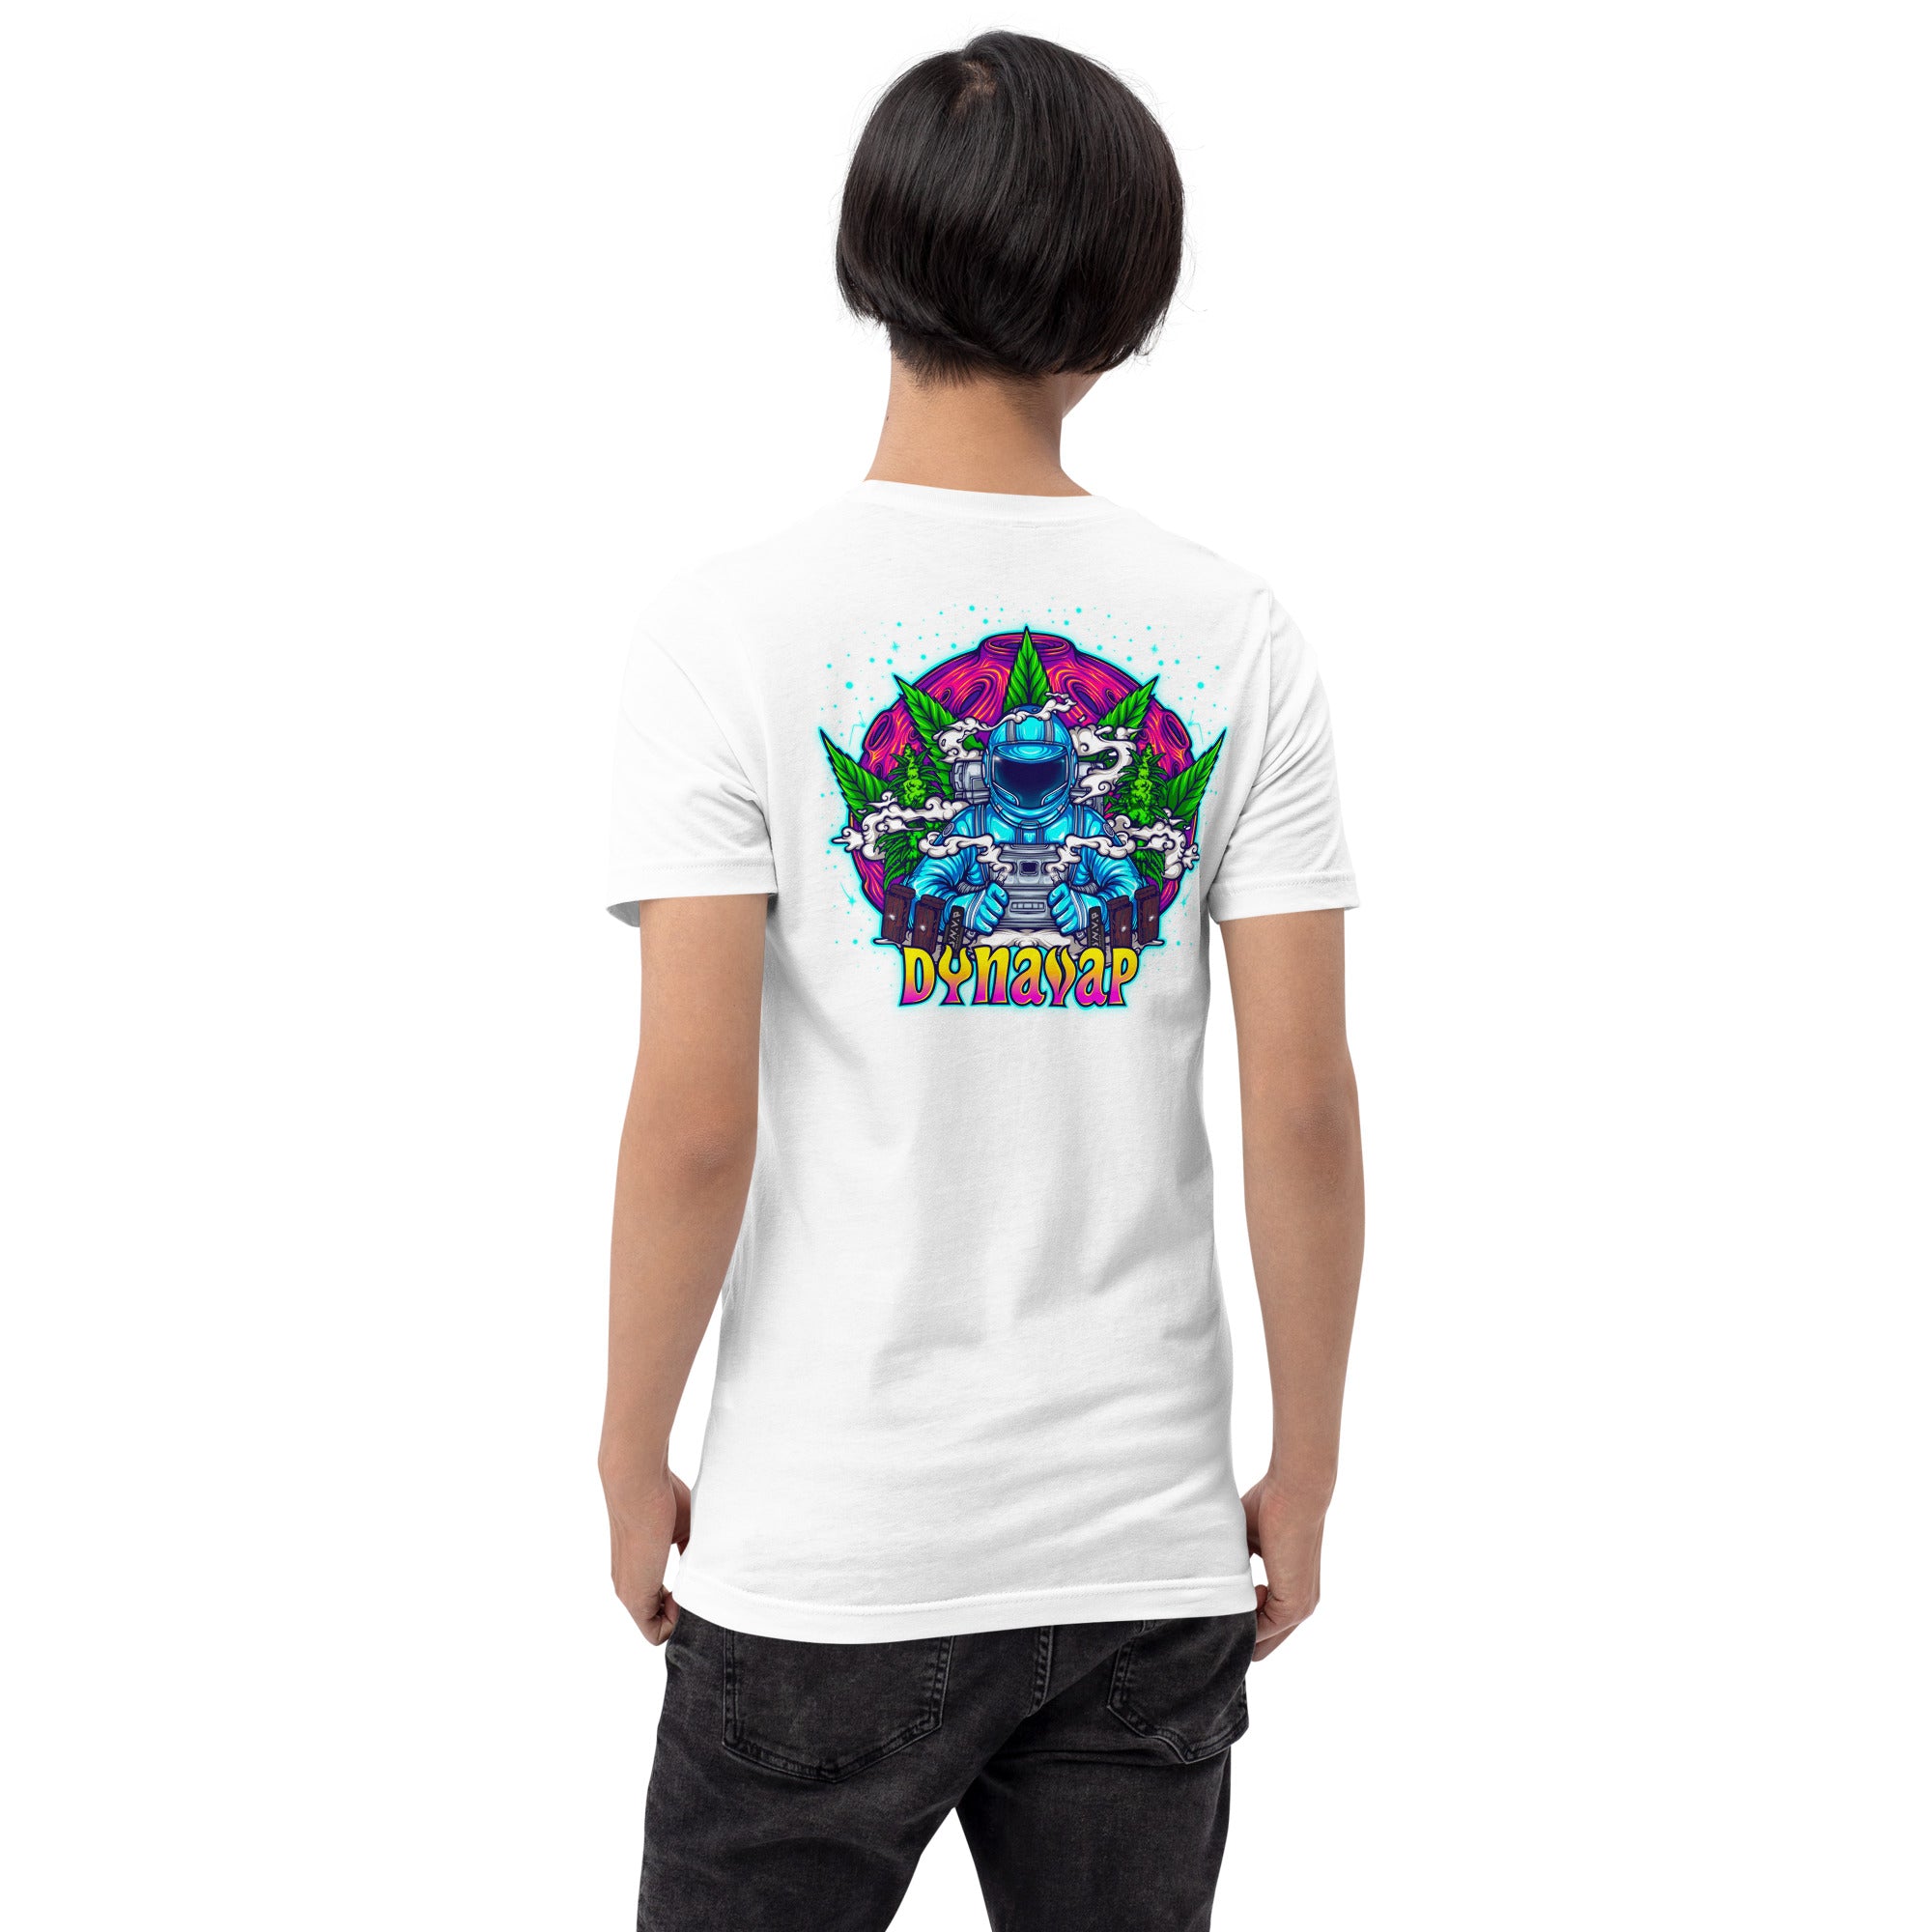 T-Shirt: DynaVap Spaceman